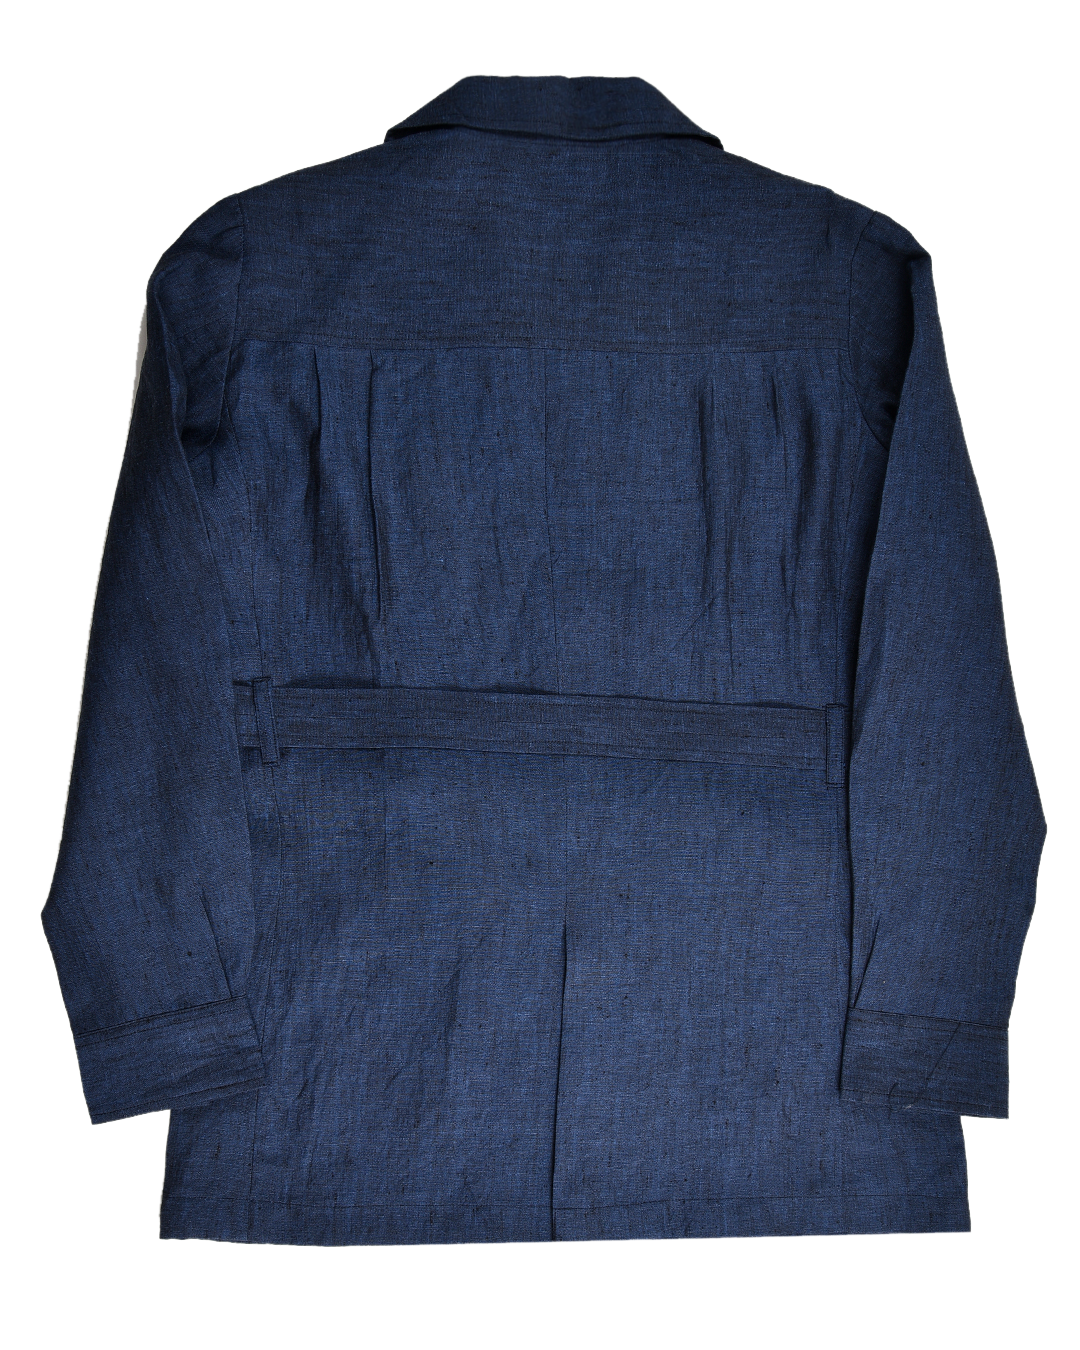 Back of the safari jacket in linen for men by Luxire in dark indigo